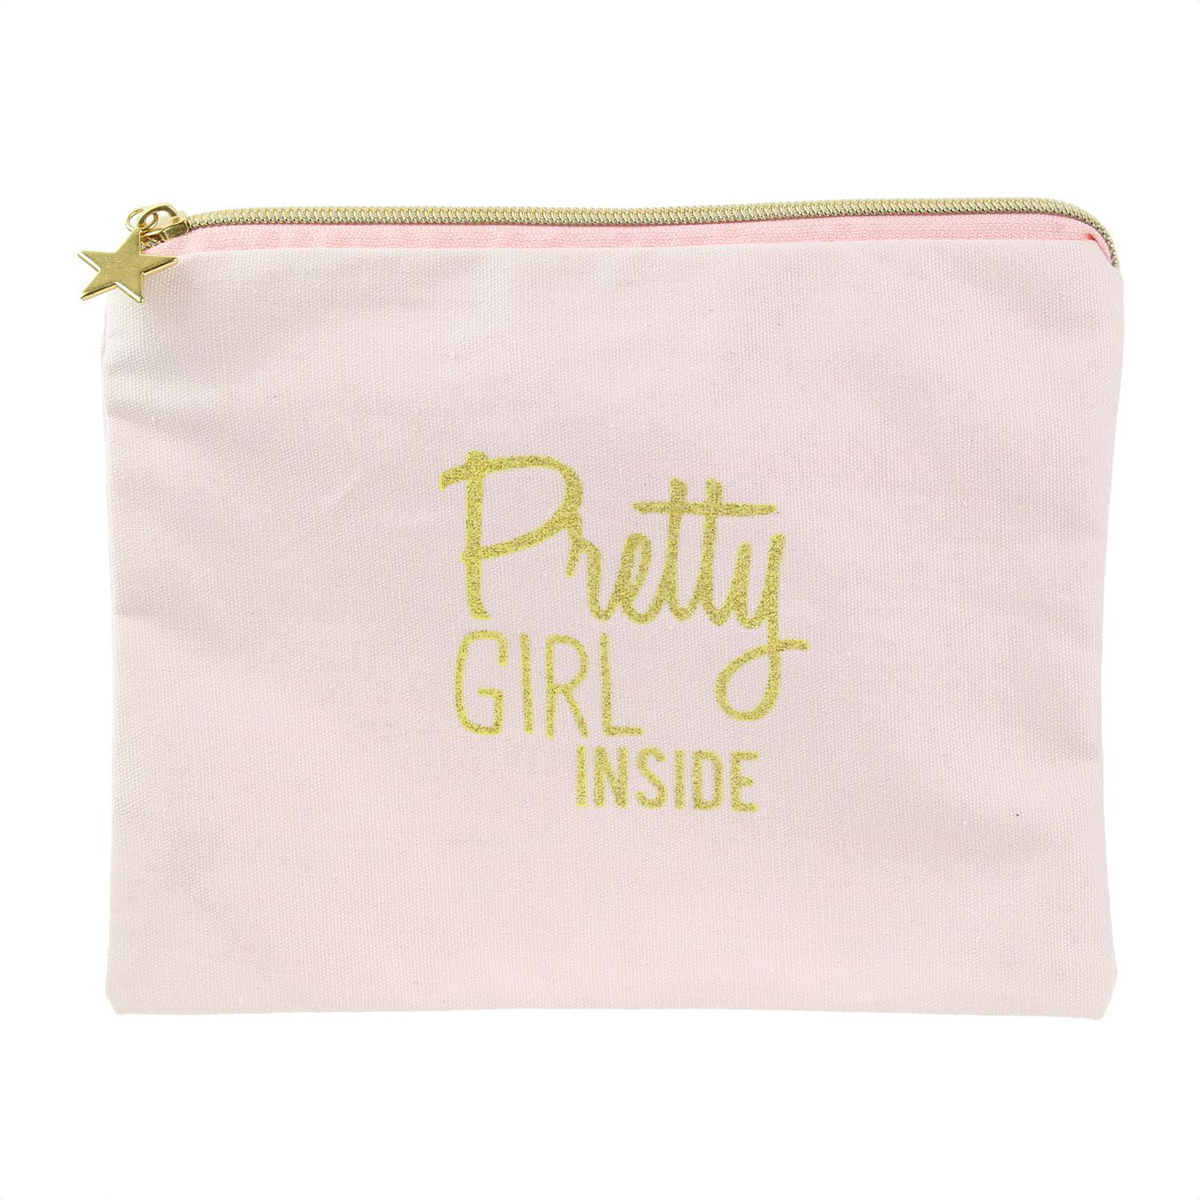 Pochette plate coton \'Messages\' rose (Pretty girl inside) - 22x165 cm - [Q3920]